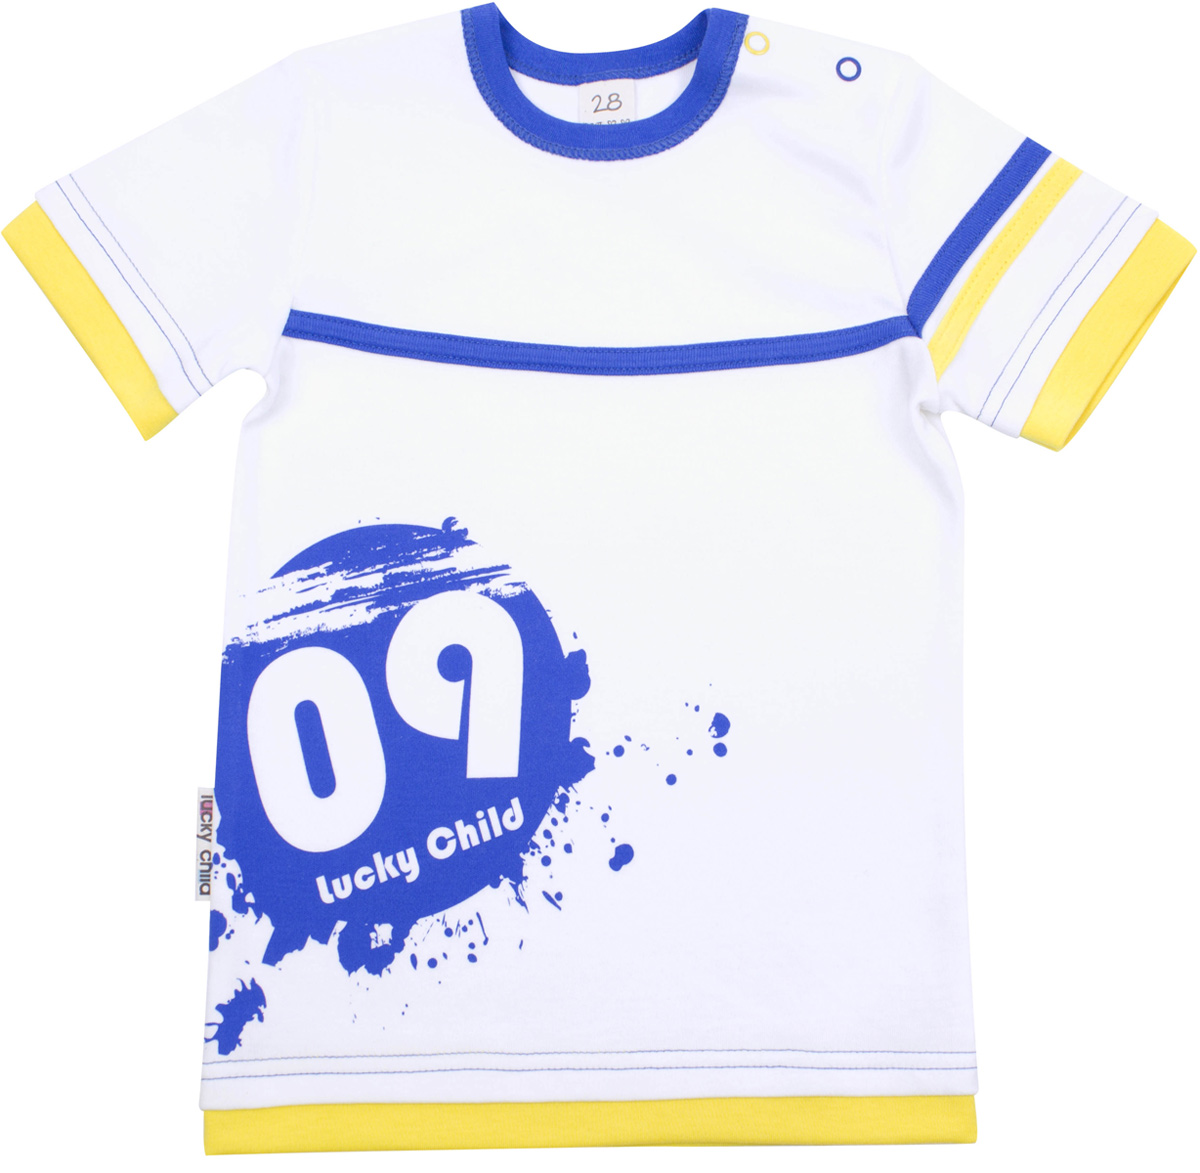 Футболка для мальчика Lucky Child Летний марафон, цвет: белый, голубой. 19-261. Размер 62/68